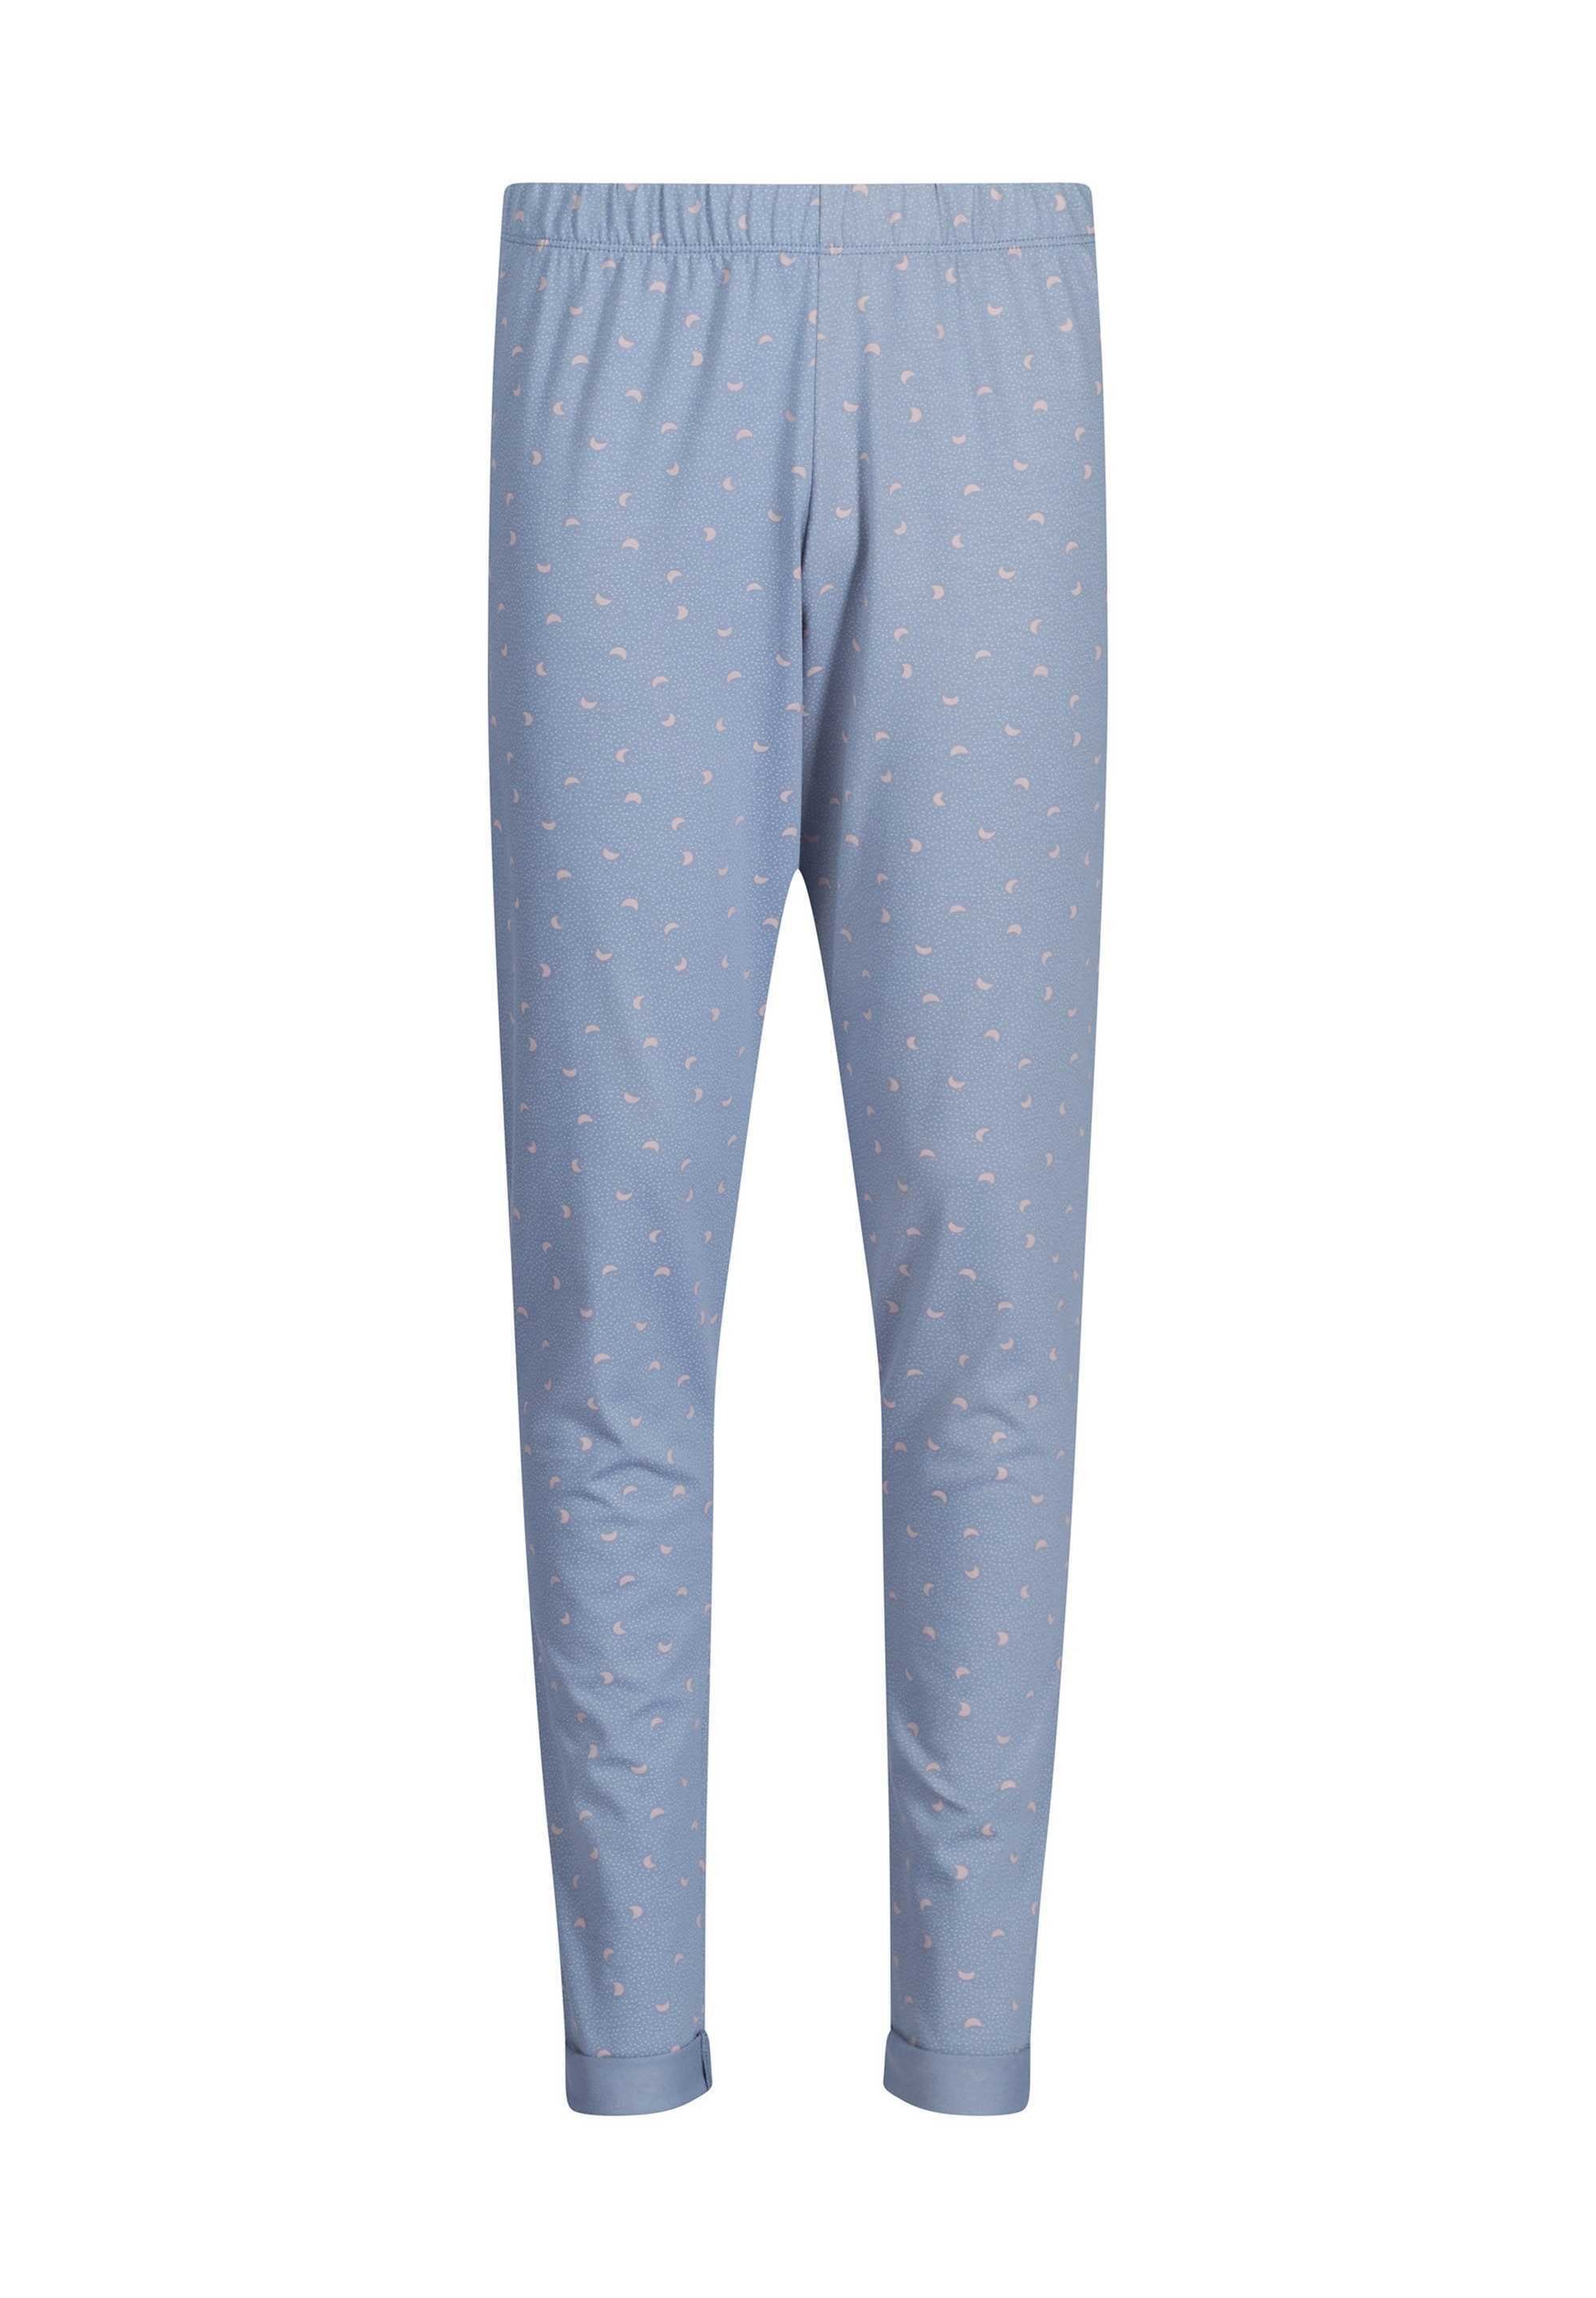 2-tlg. Pyjama Skiny Grau-Blau Set Mädchen - Kinder, lang, Schlafanzug